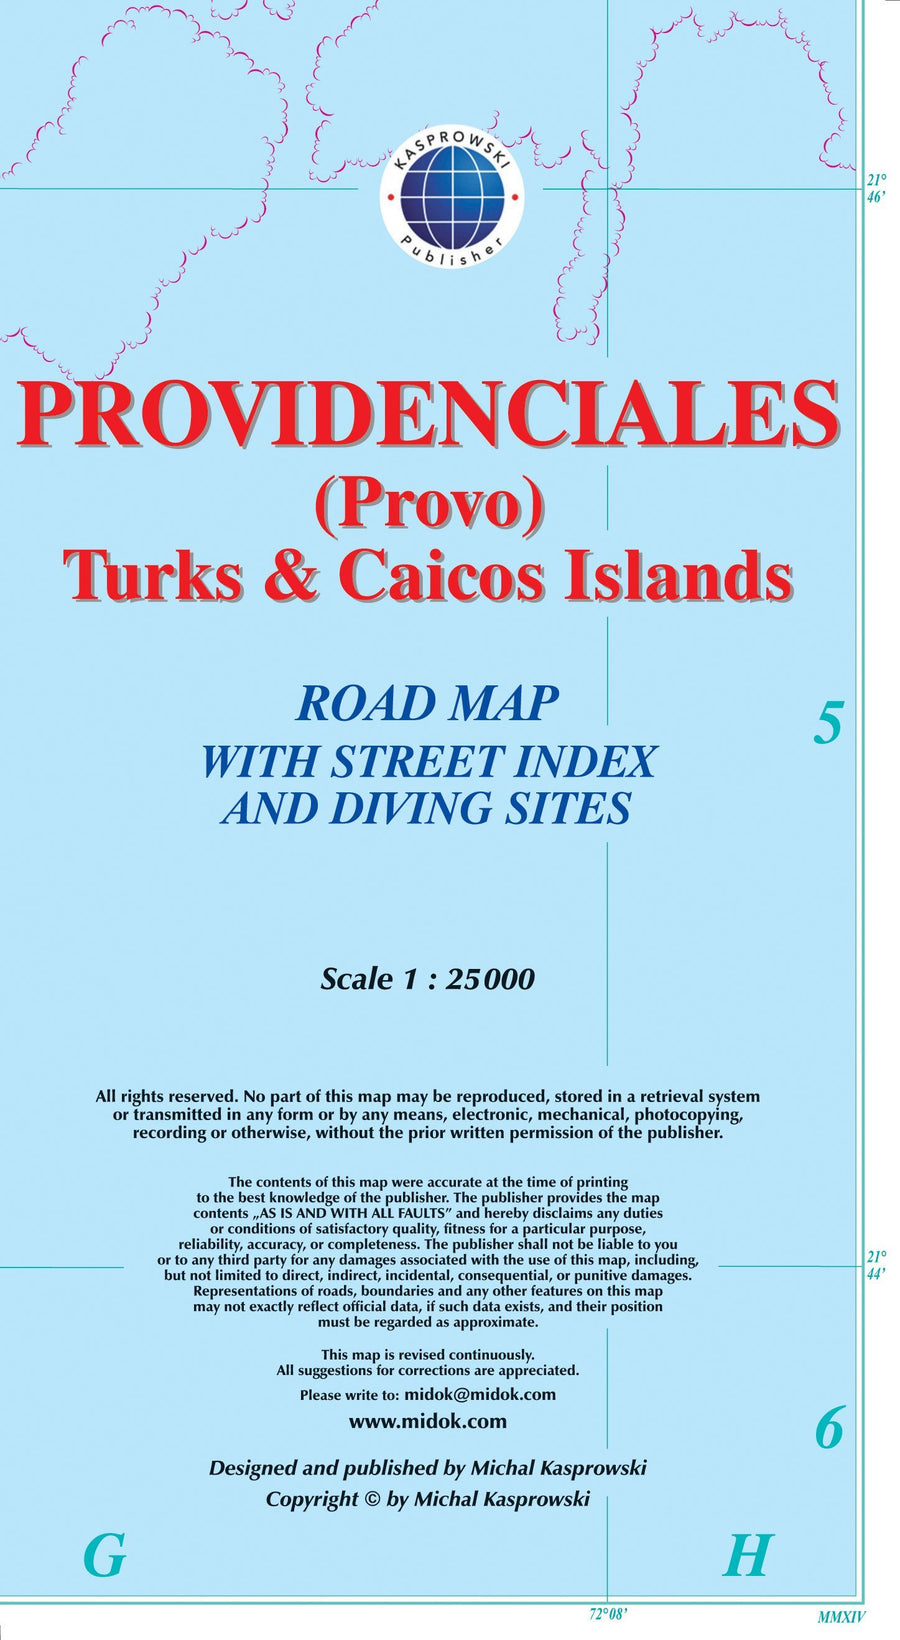 Carte topographique - Providenciales (Provo), Turks & Caicos Islands | Kasprowski carte pliée Kasprowski 